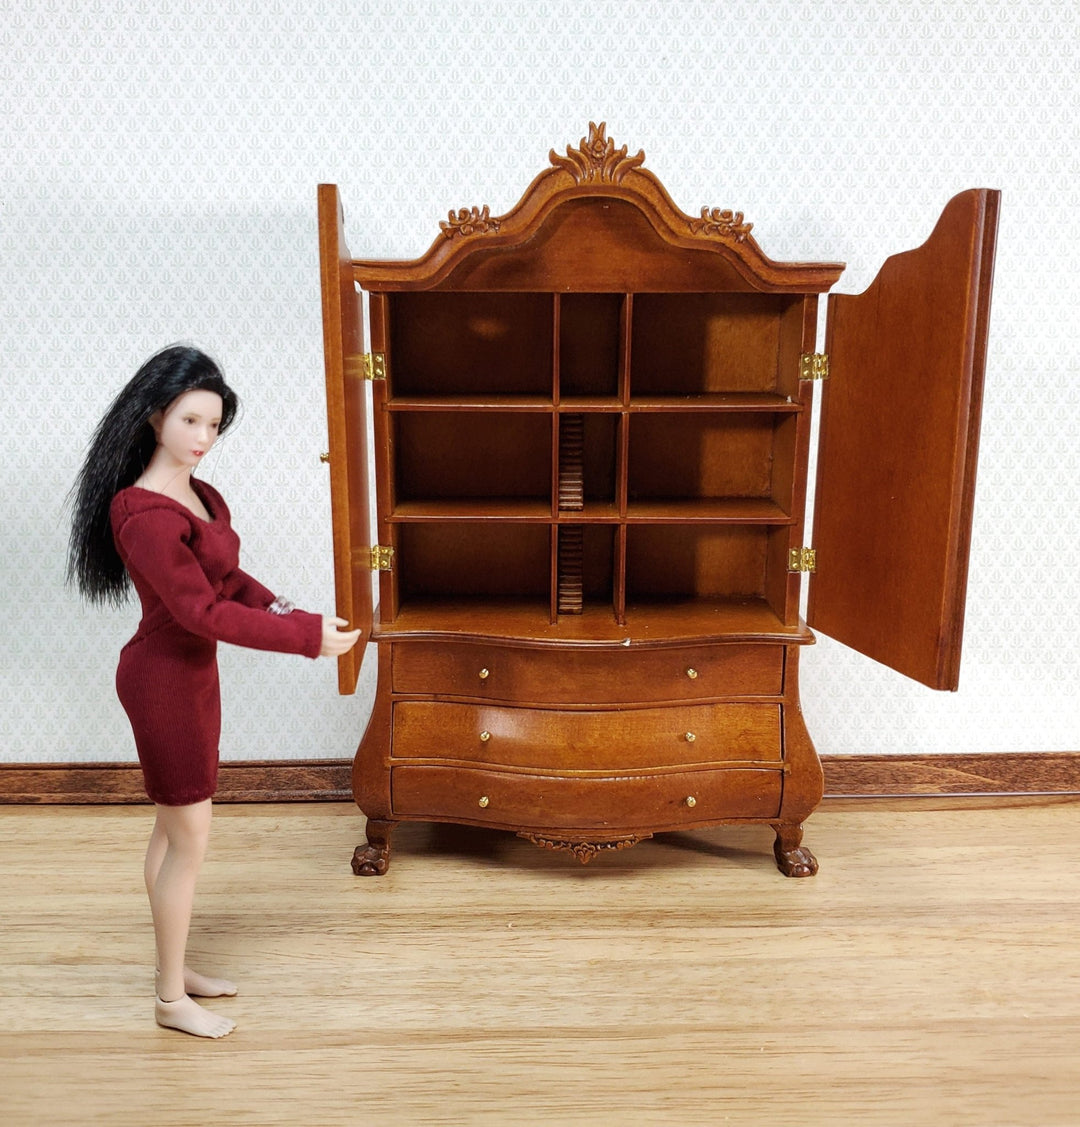 JBM Dutch Baby House Cabinet Dollhouse Large 1:12 Scale Miniature Walnut Finish - Miniature Crush